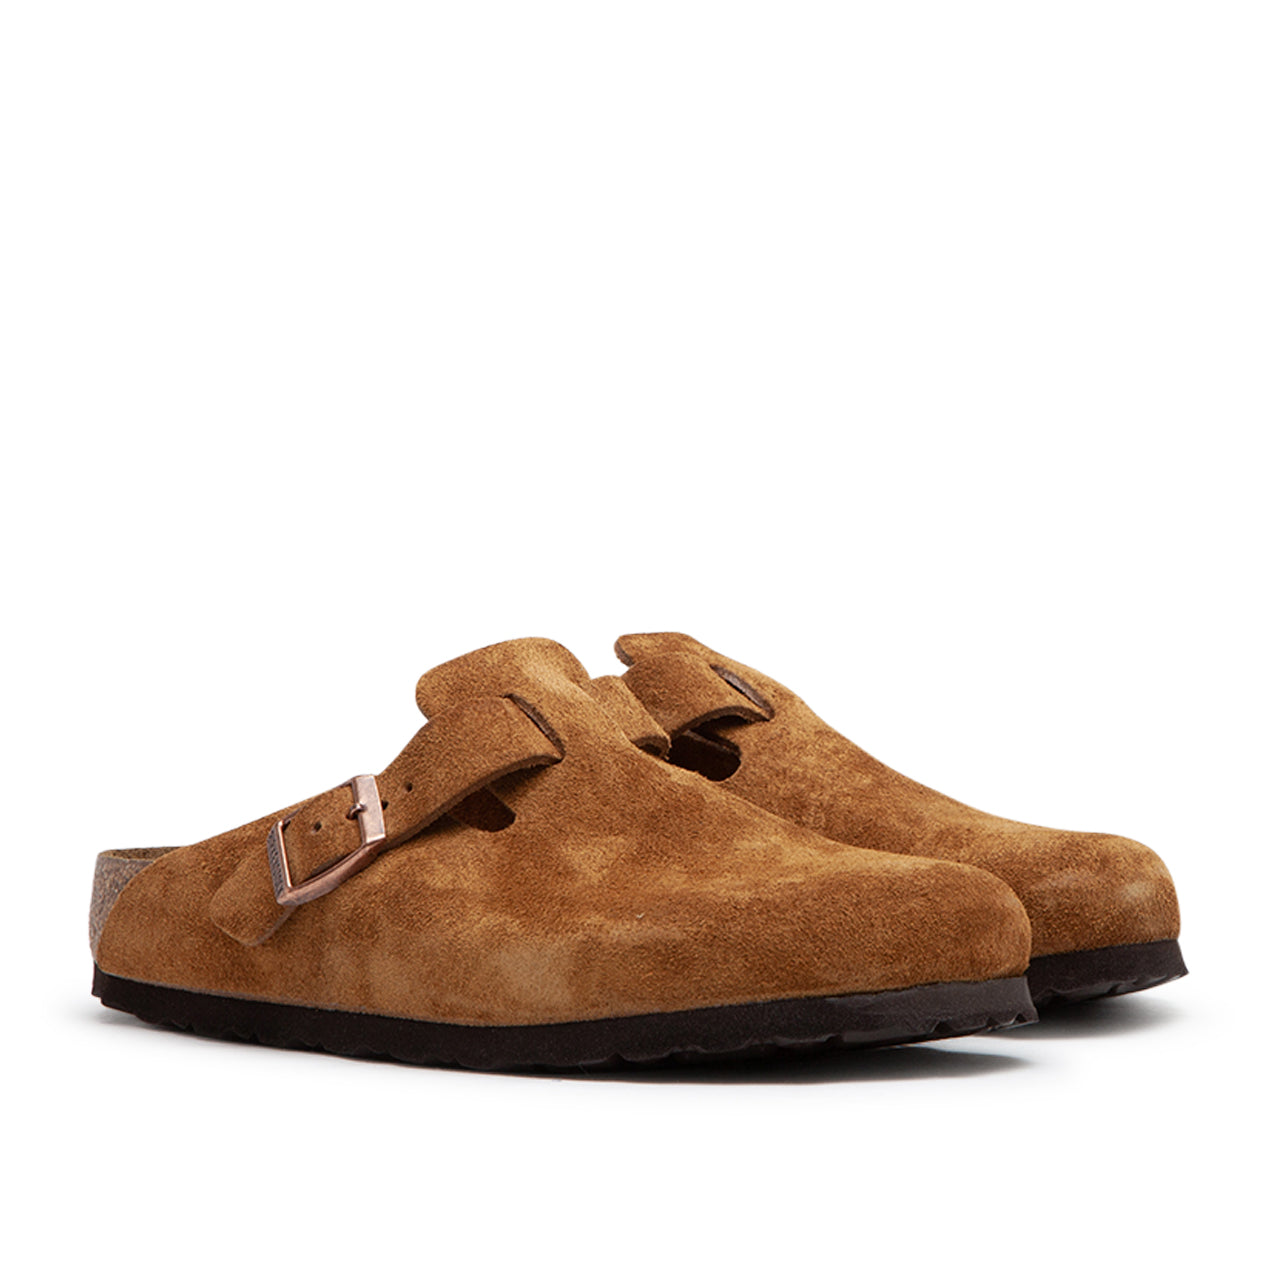 Birkenstock Boston Soft Footbed Suede Leather (Braun)  - Cheap Juzsports Jordan Outlet